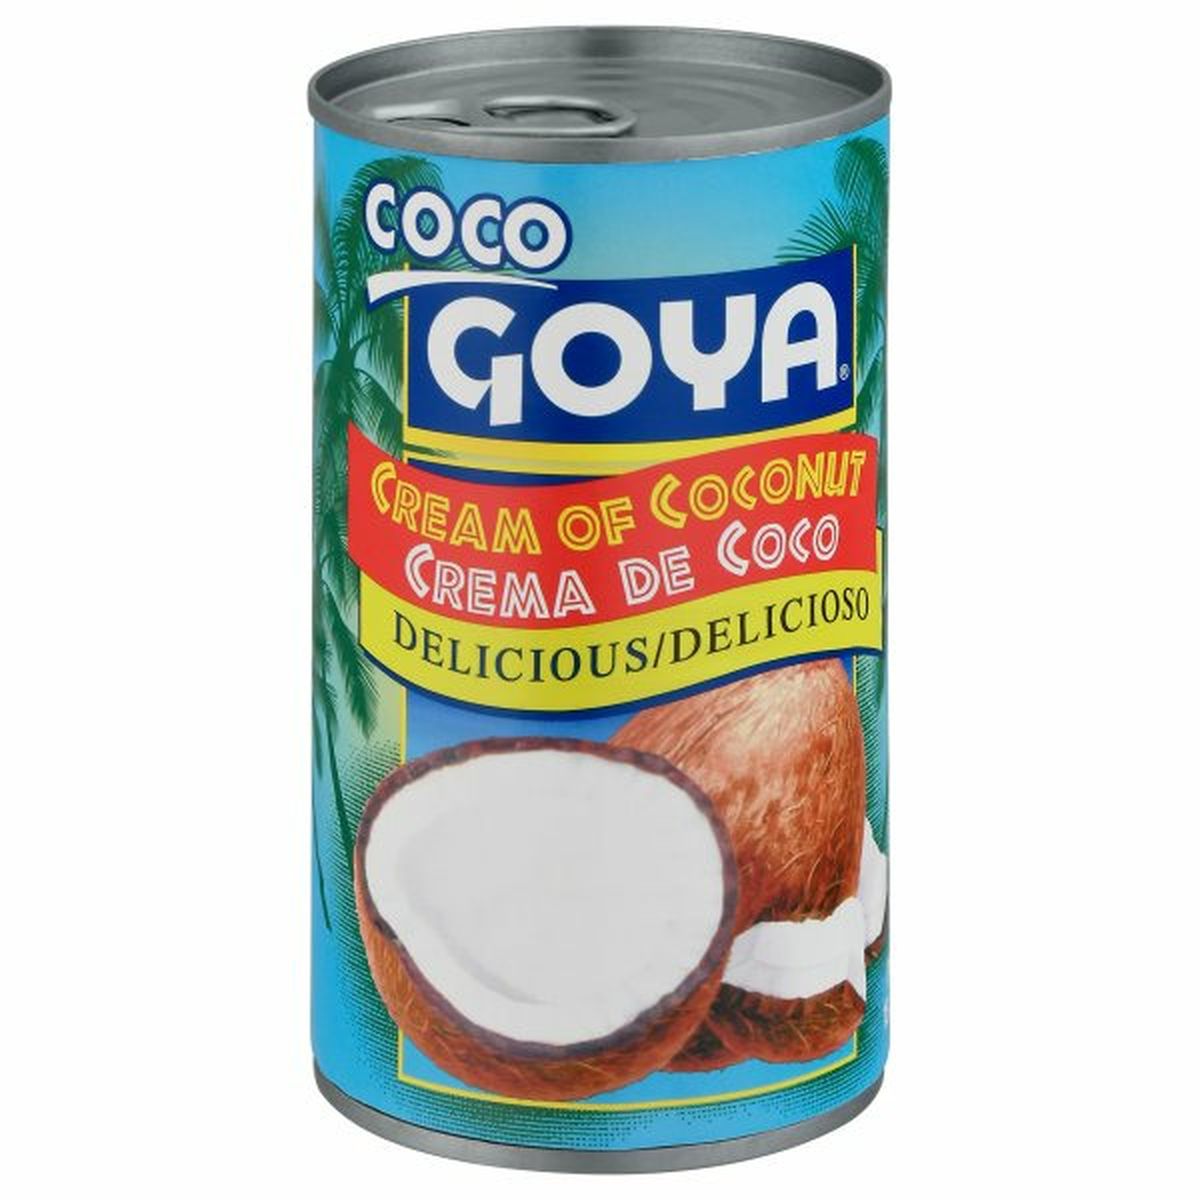 Calories in Goya Cream of Coconut, Coco